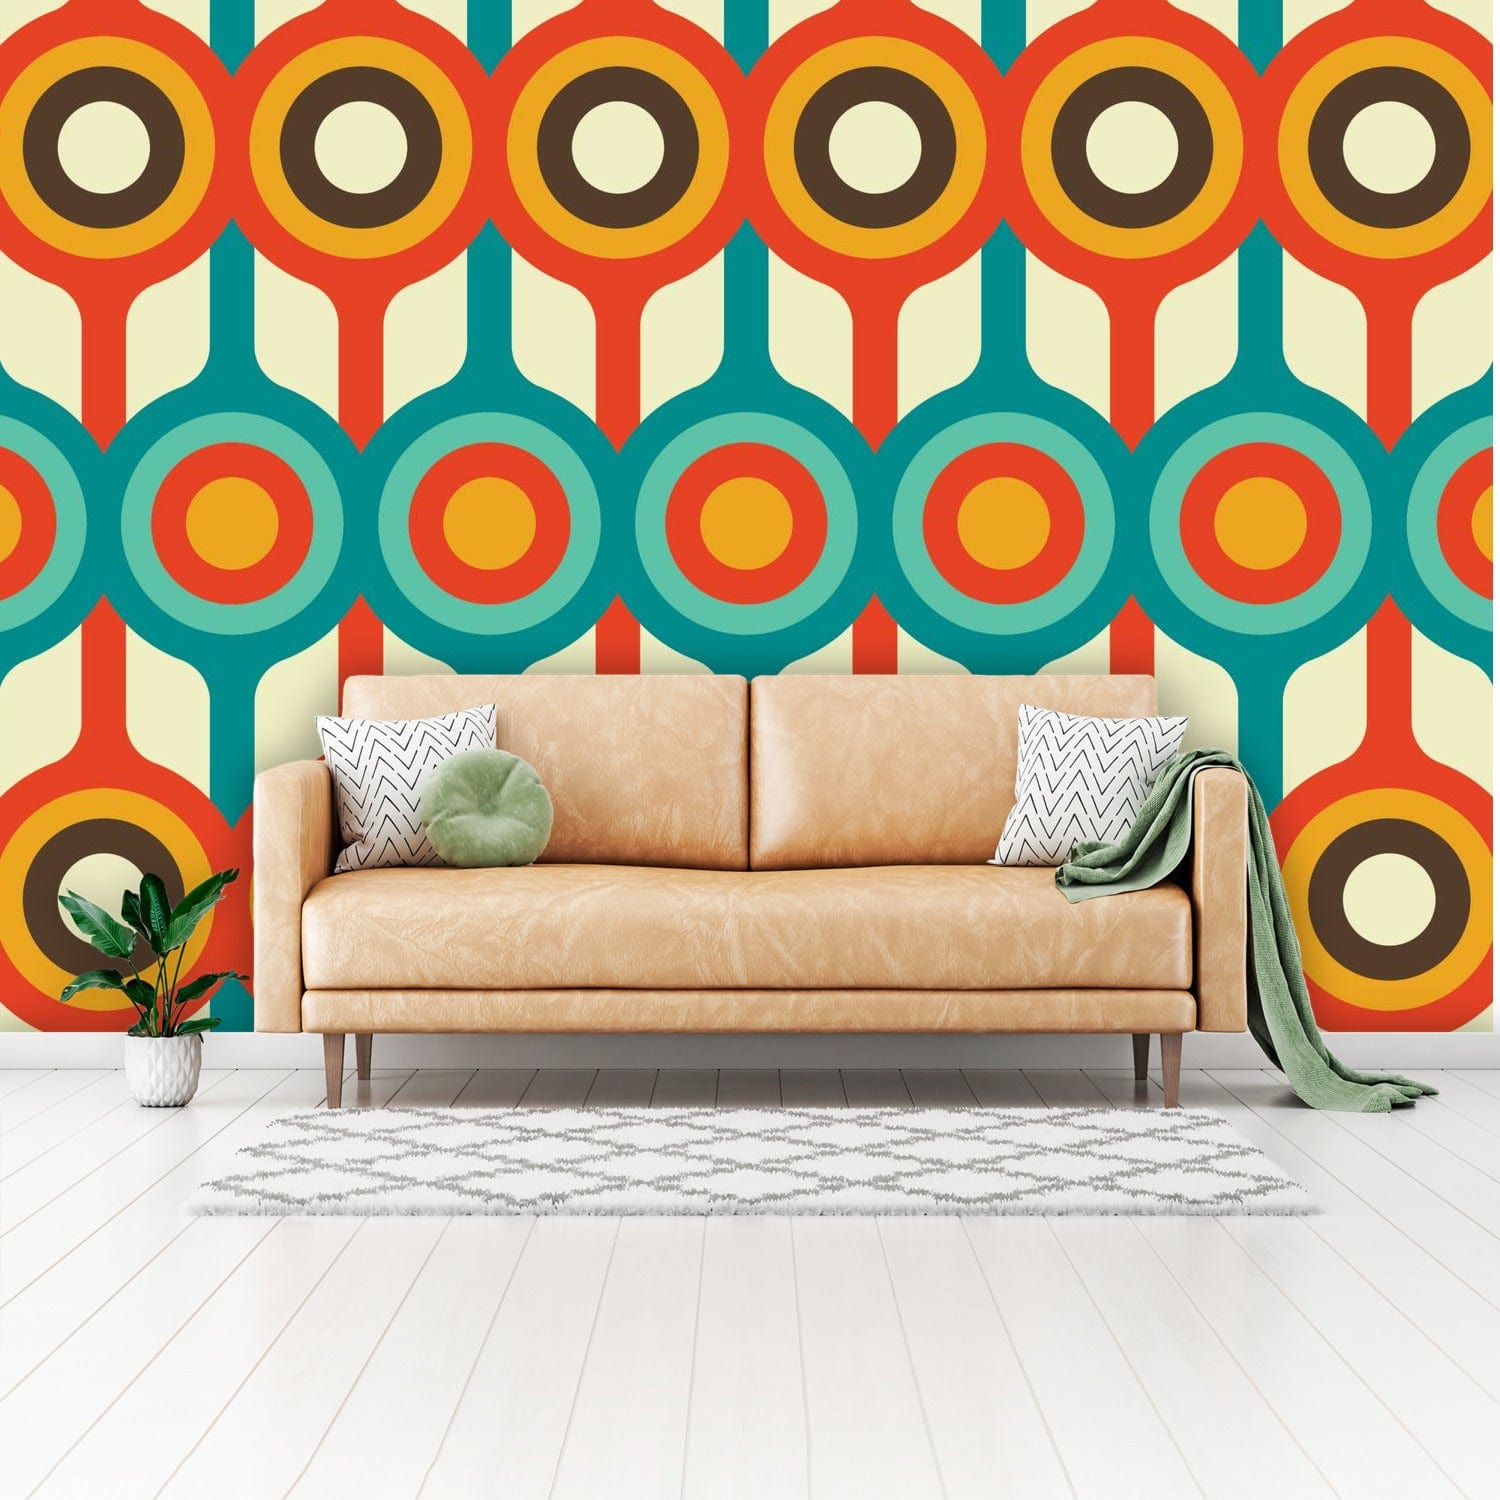 Mid Century Modern, Retro Groovy, Orange, Brown, Teal, Cream, Geometric Peel And Stick Wall Murals Wallpaper